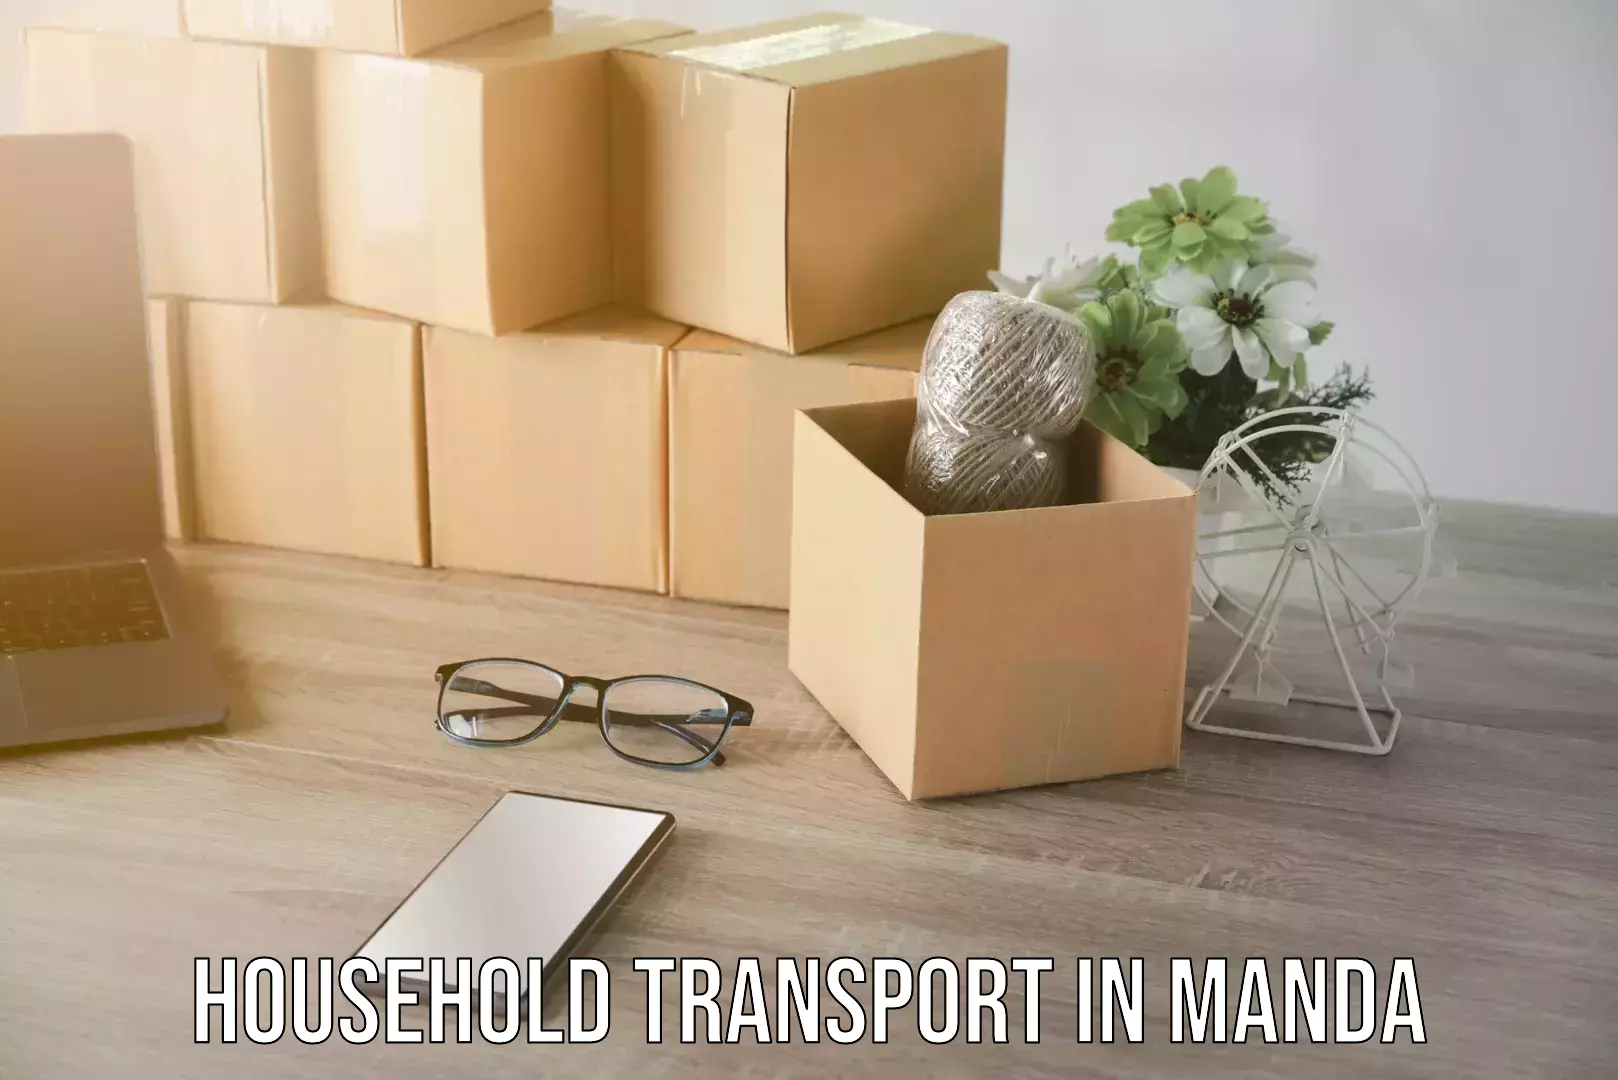 Quality household transport in Manda